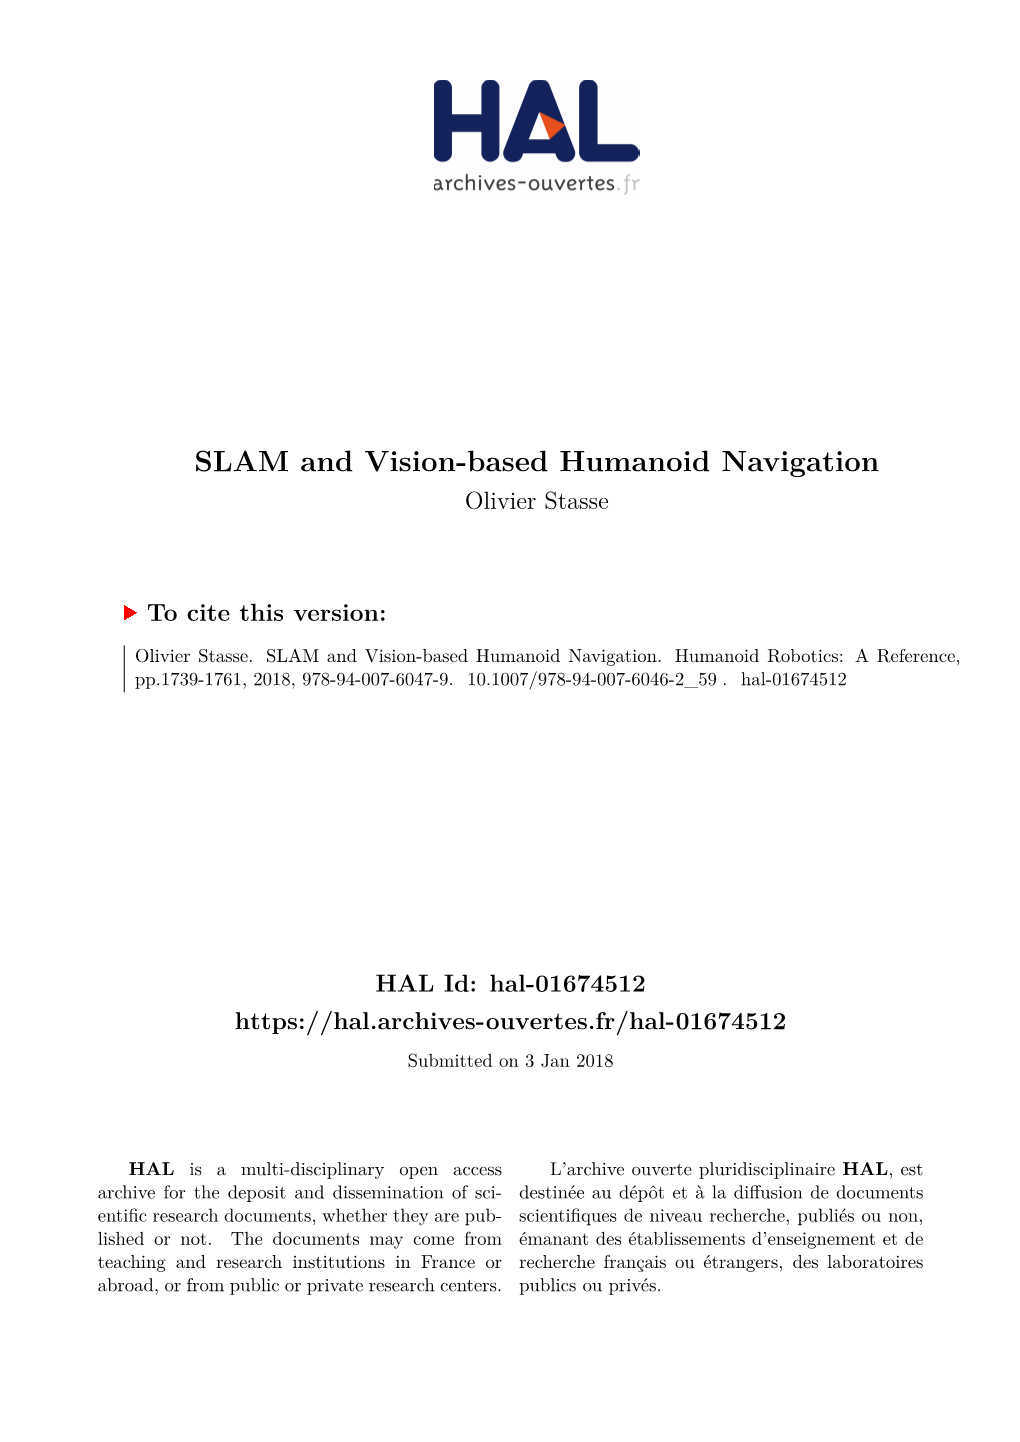 SLAM and Vision-Based Humanoid Navigation Olivier Stasse